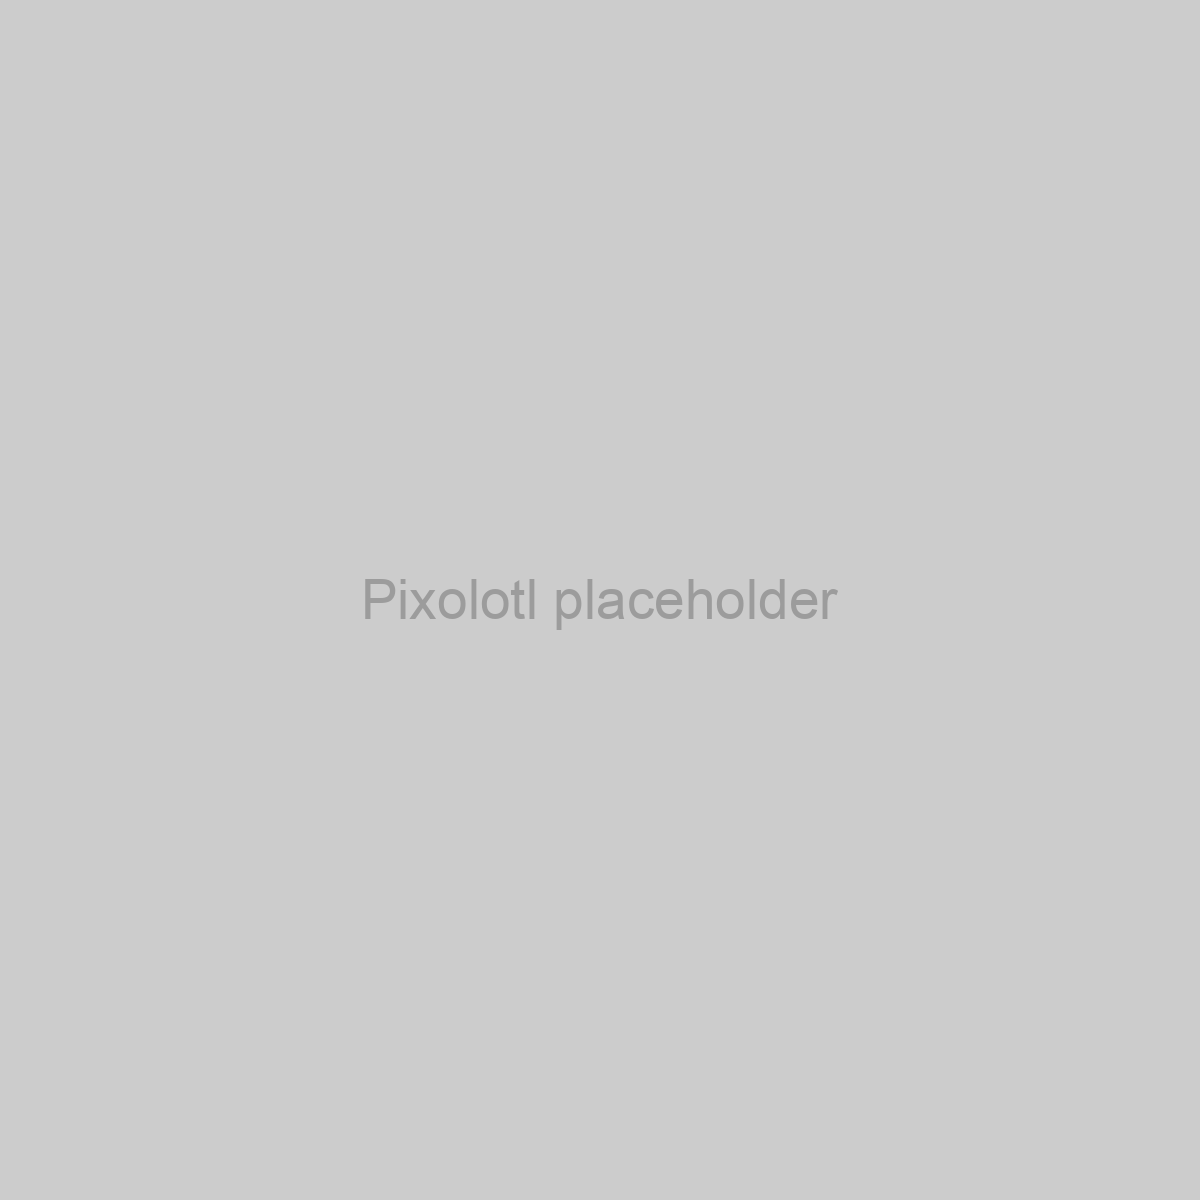 Pixolotl Placeholder Image